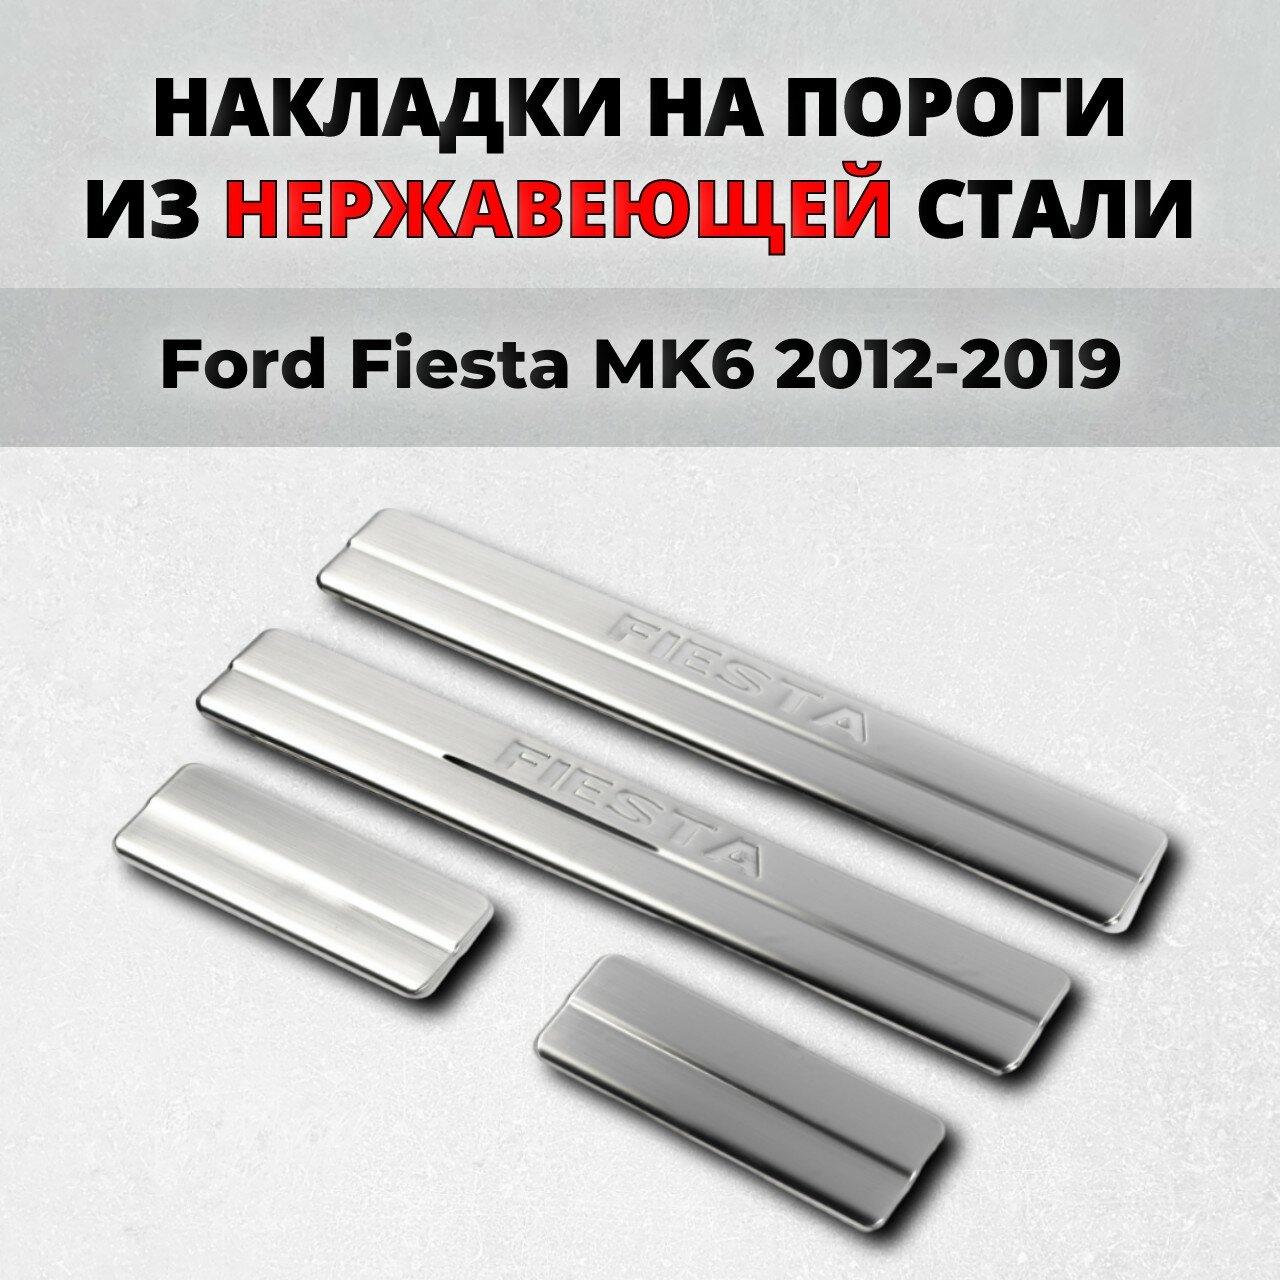 Накладки на пороги Форд Фиеста Мк6 c 2012- из нержавеющей стали FORD Fiesta Mk6